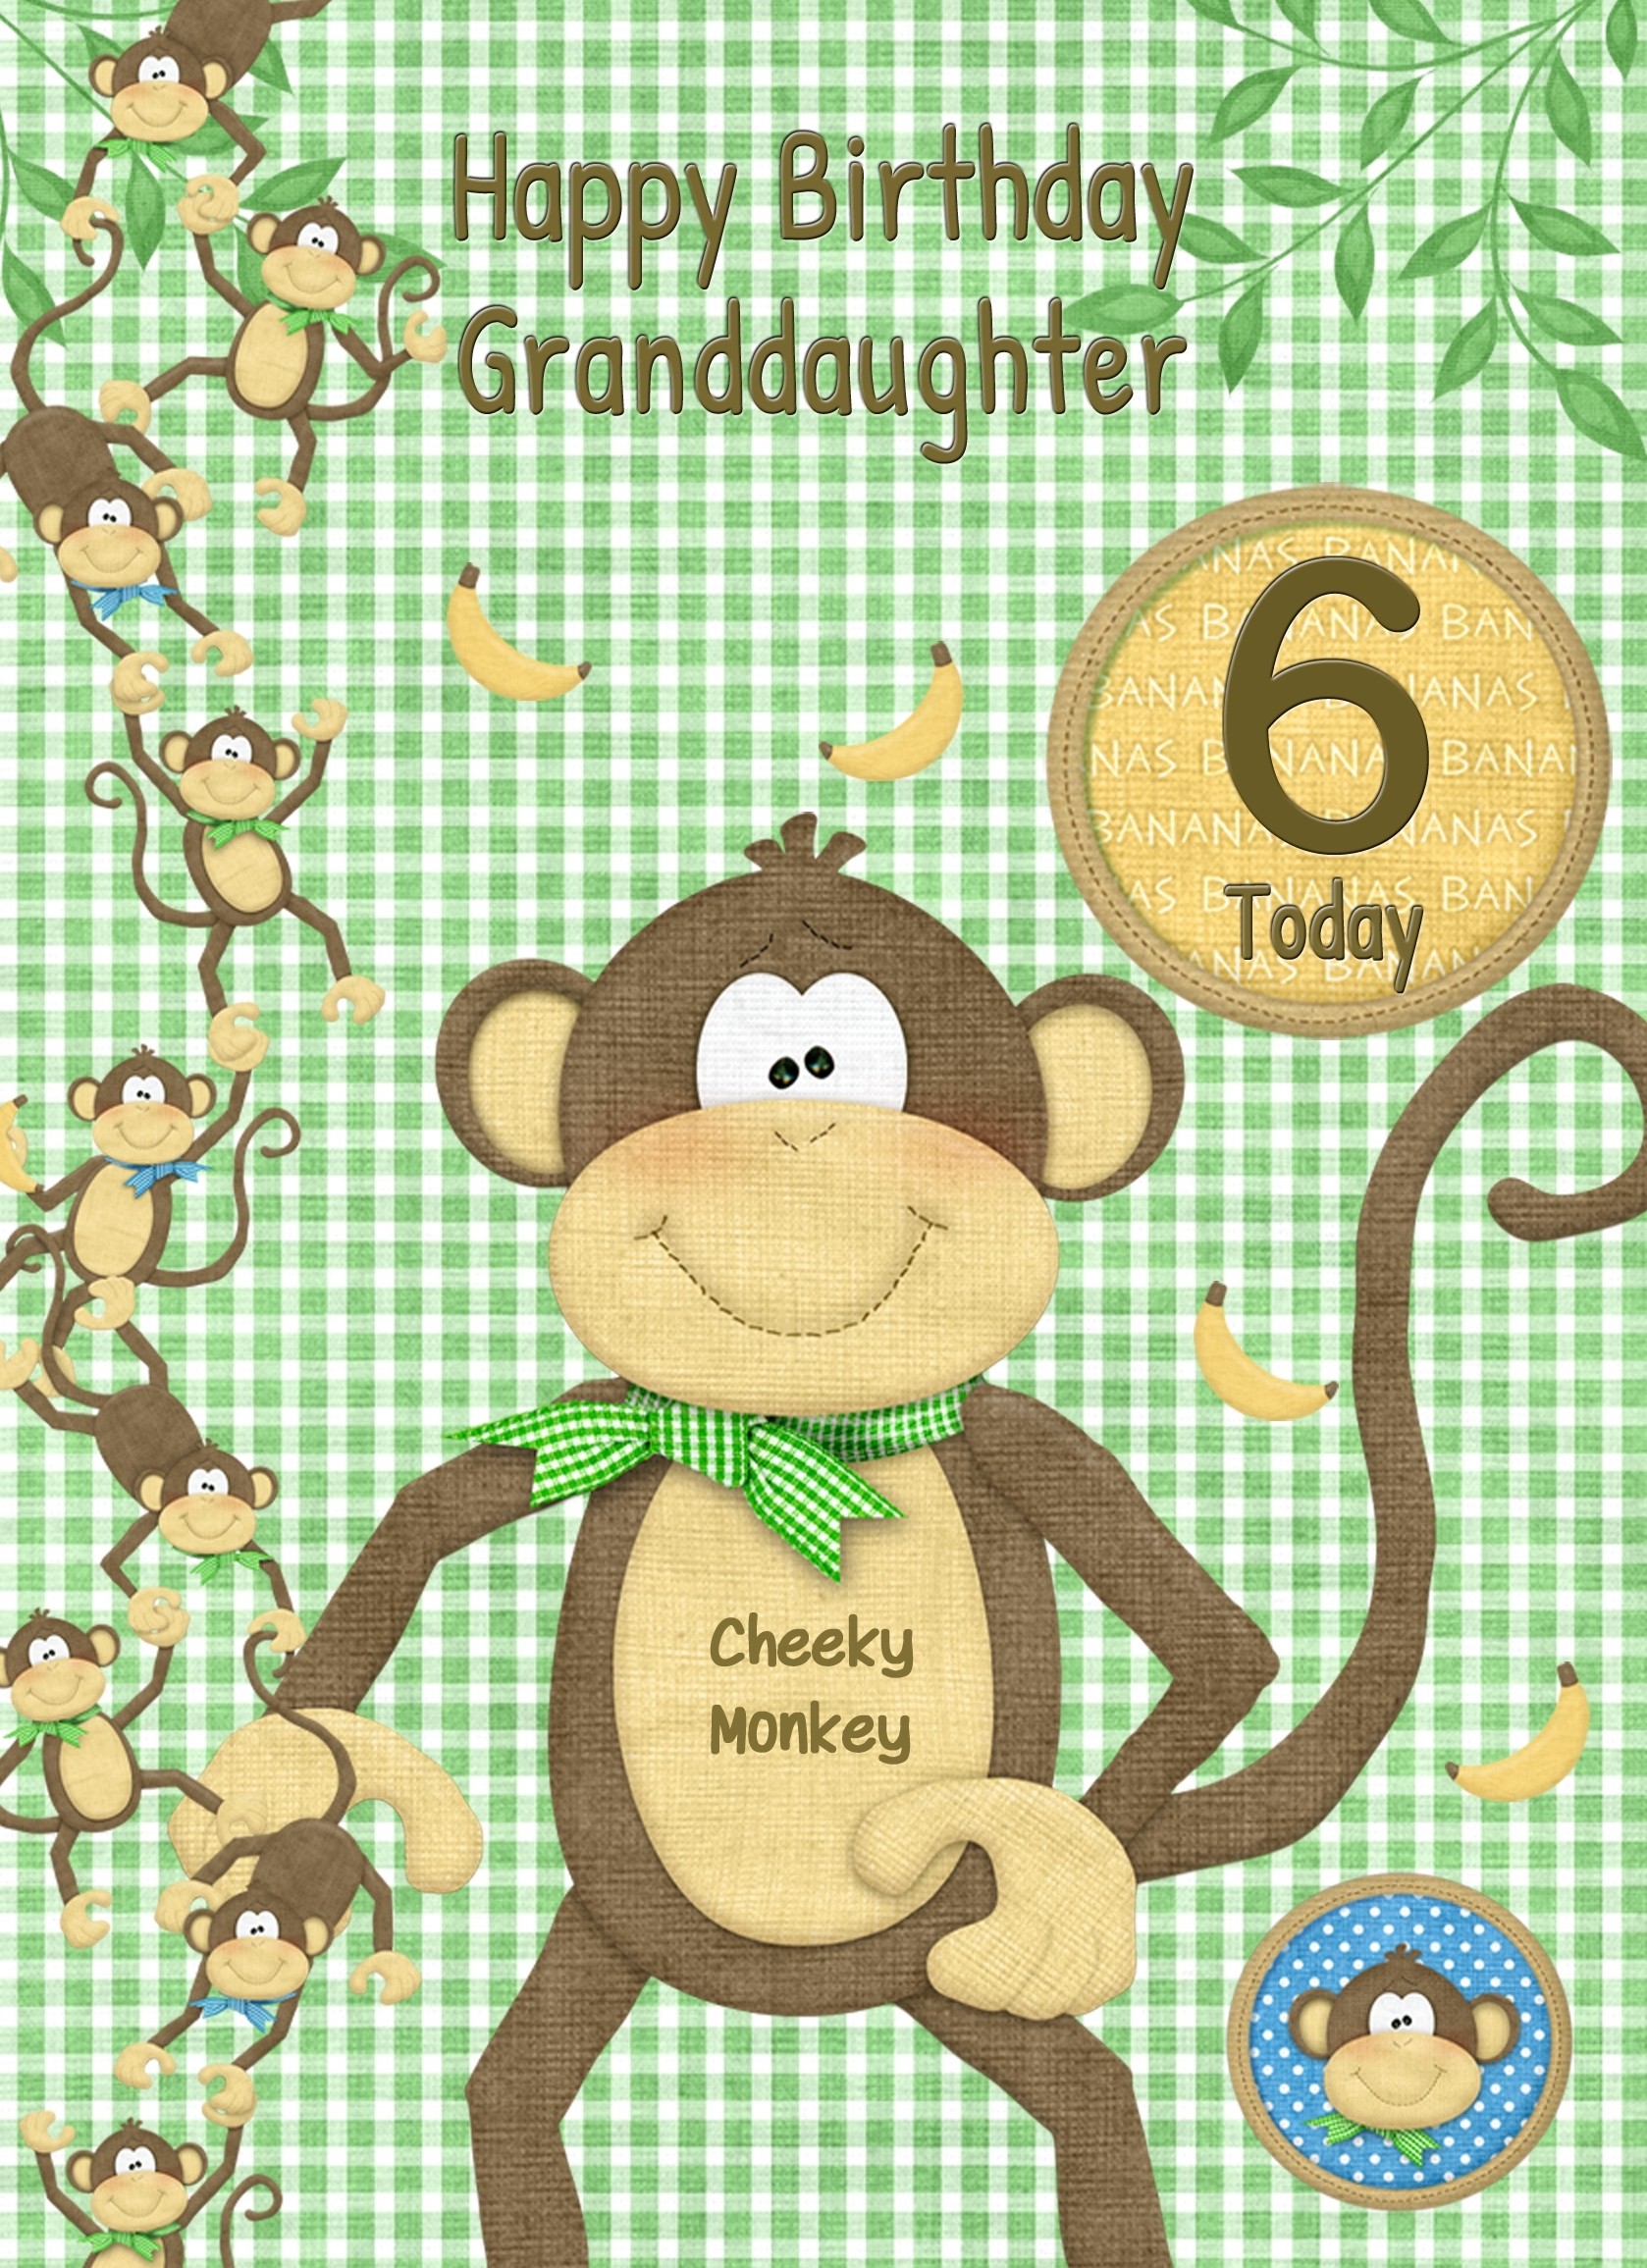 Kids 6th Birthday Cheeky Monkey Cartoon Card for Granddaughter